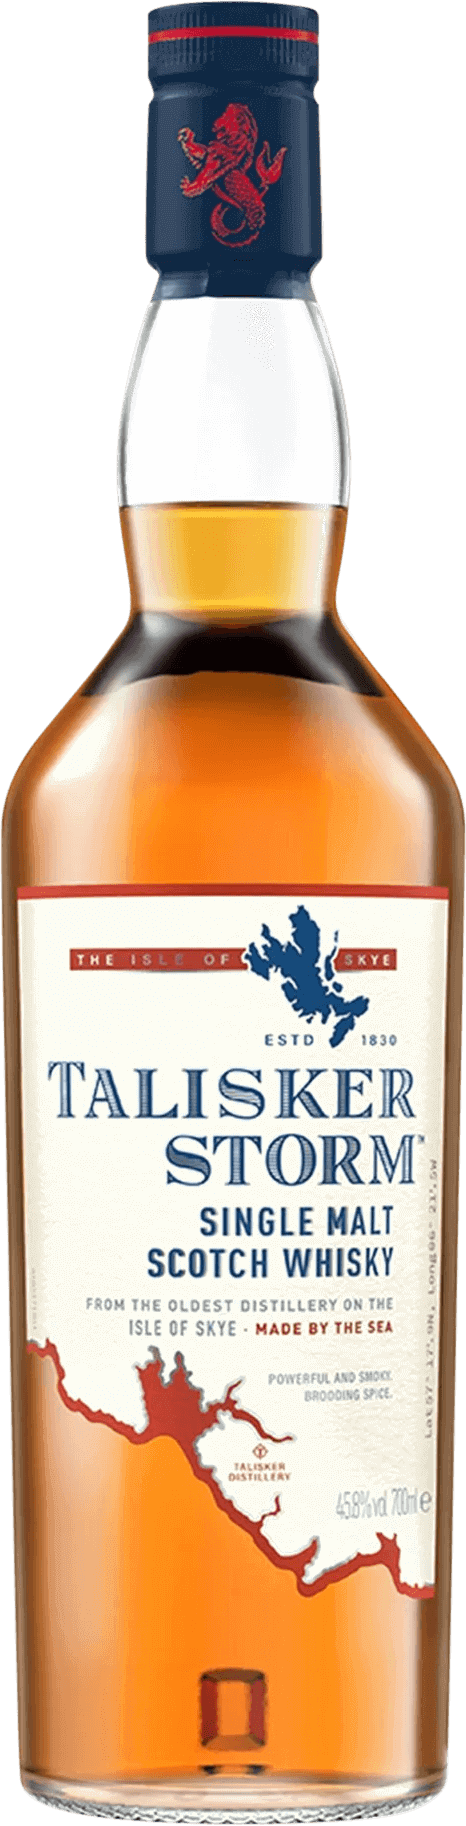 An image of a bottle of Talisker Storm Single Malt Isle of Skye Scotch Whisky